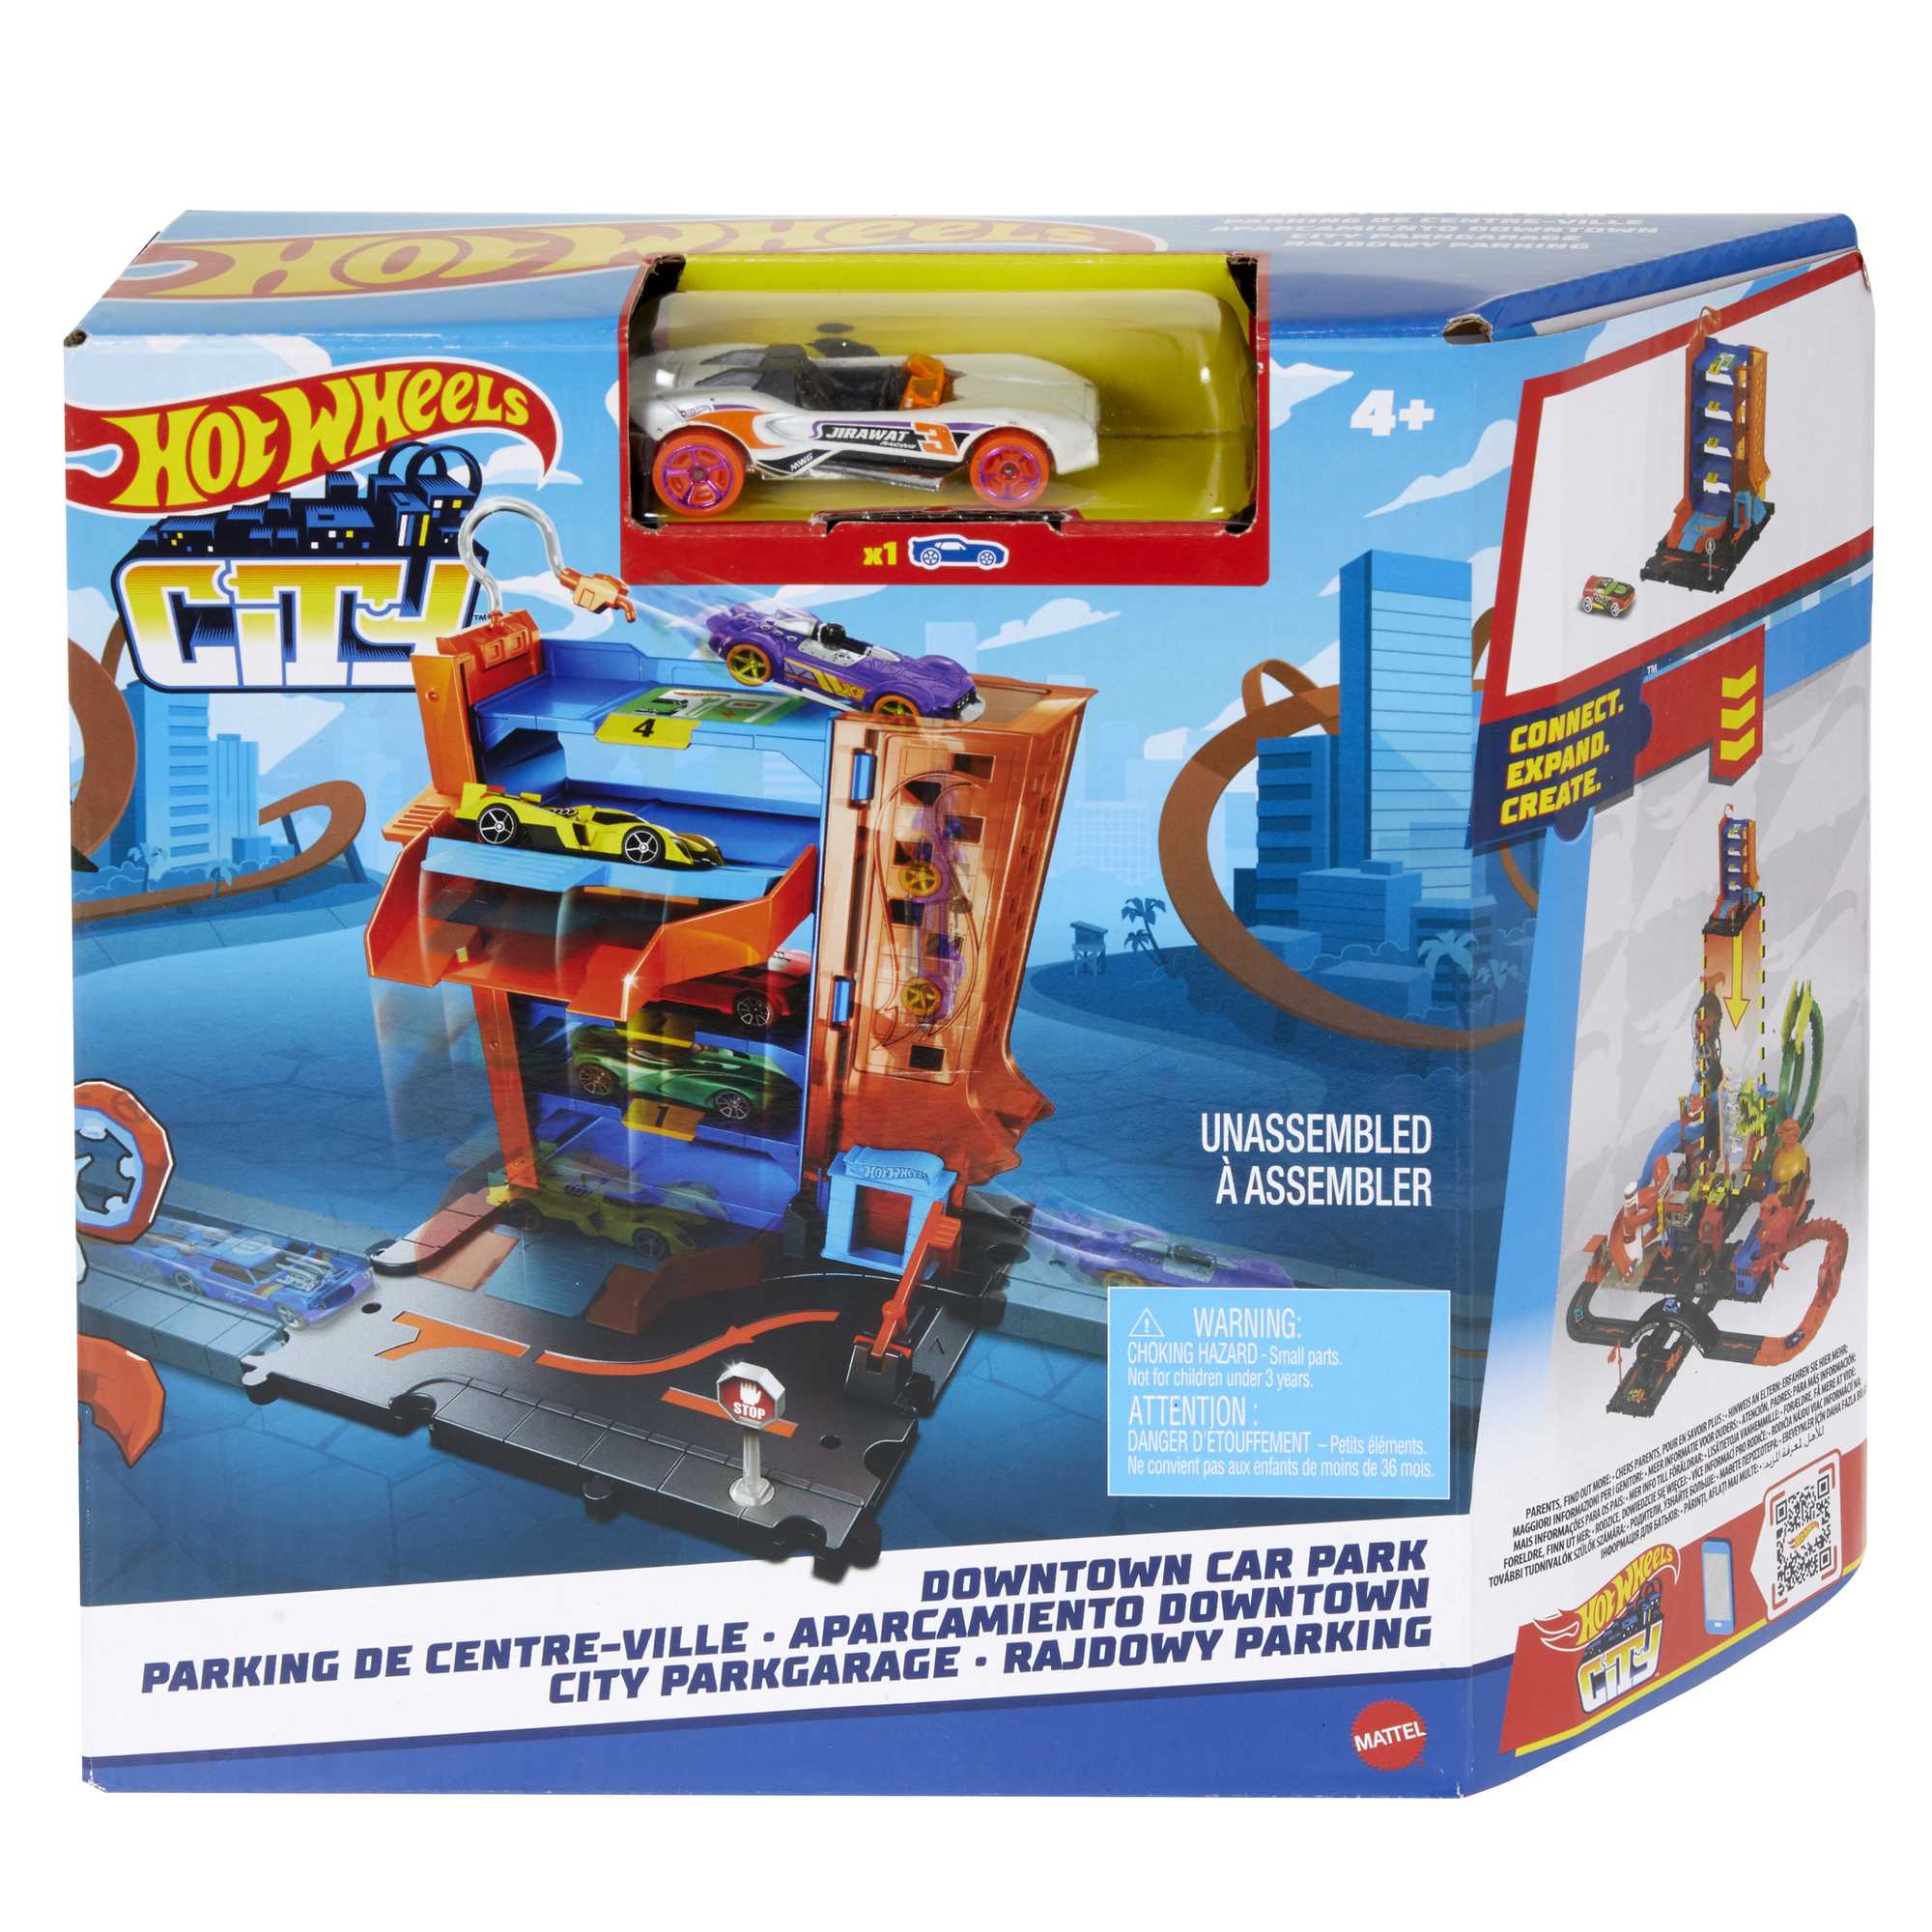 Mattel-Hot Wheels City Downtown Car Park-HDR28-Legacy Toys